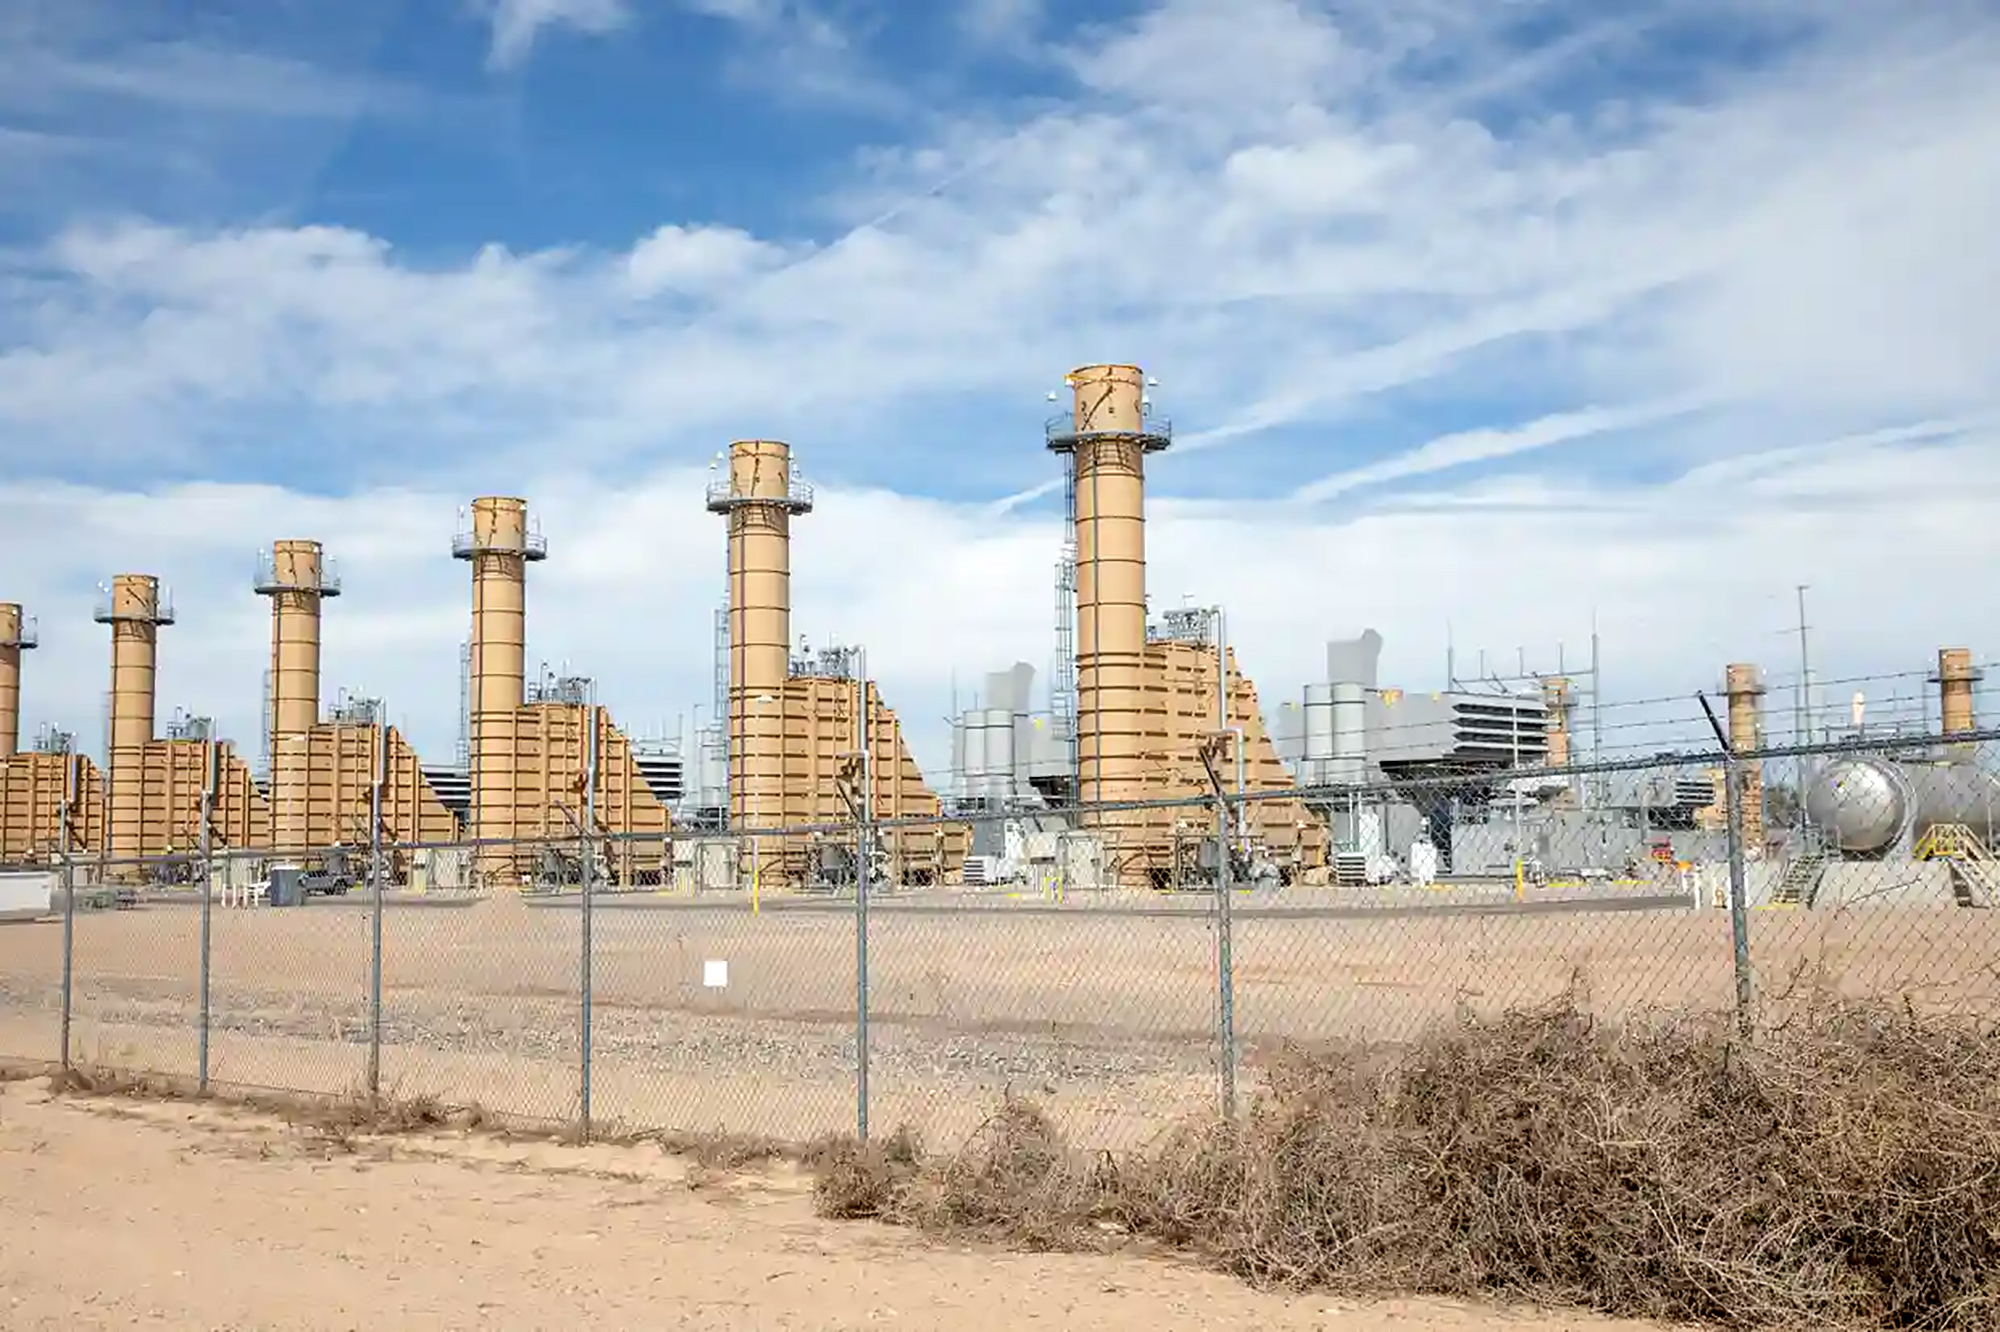 The stacks of the Salt River Project generating station near Randolph, Arizona.